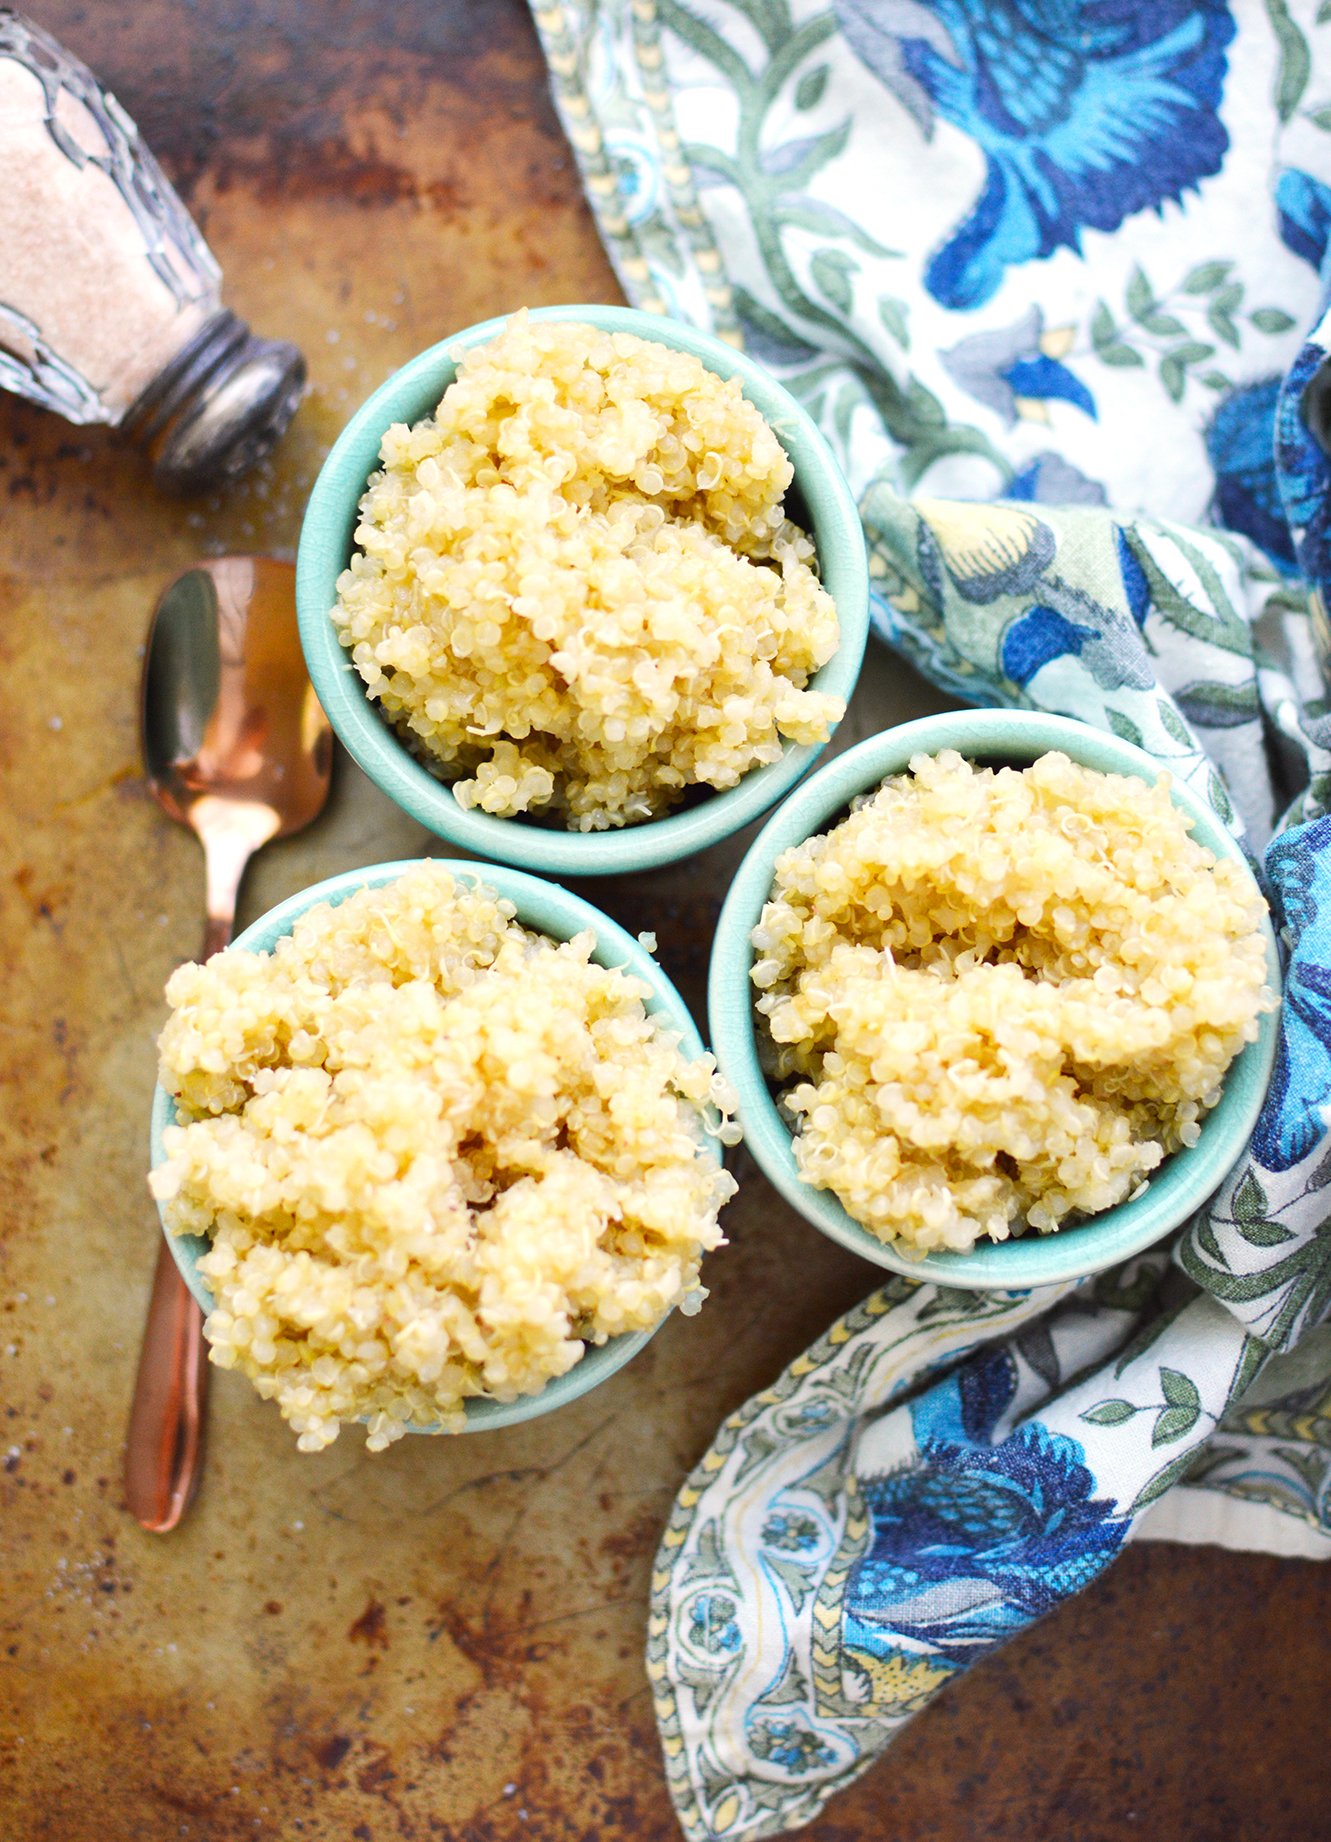 Delicious Instant Pot Quinoa in Bowls